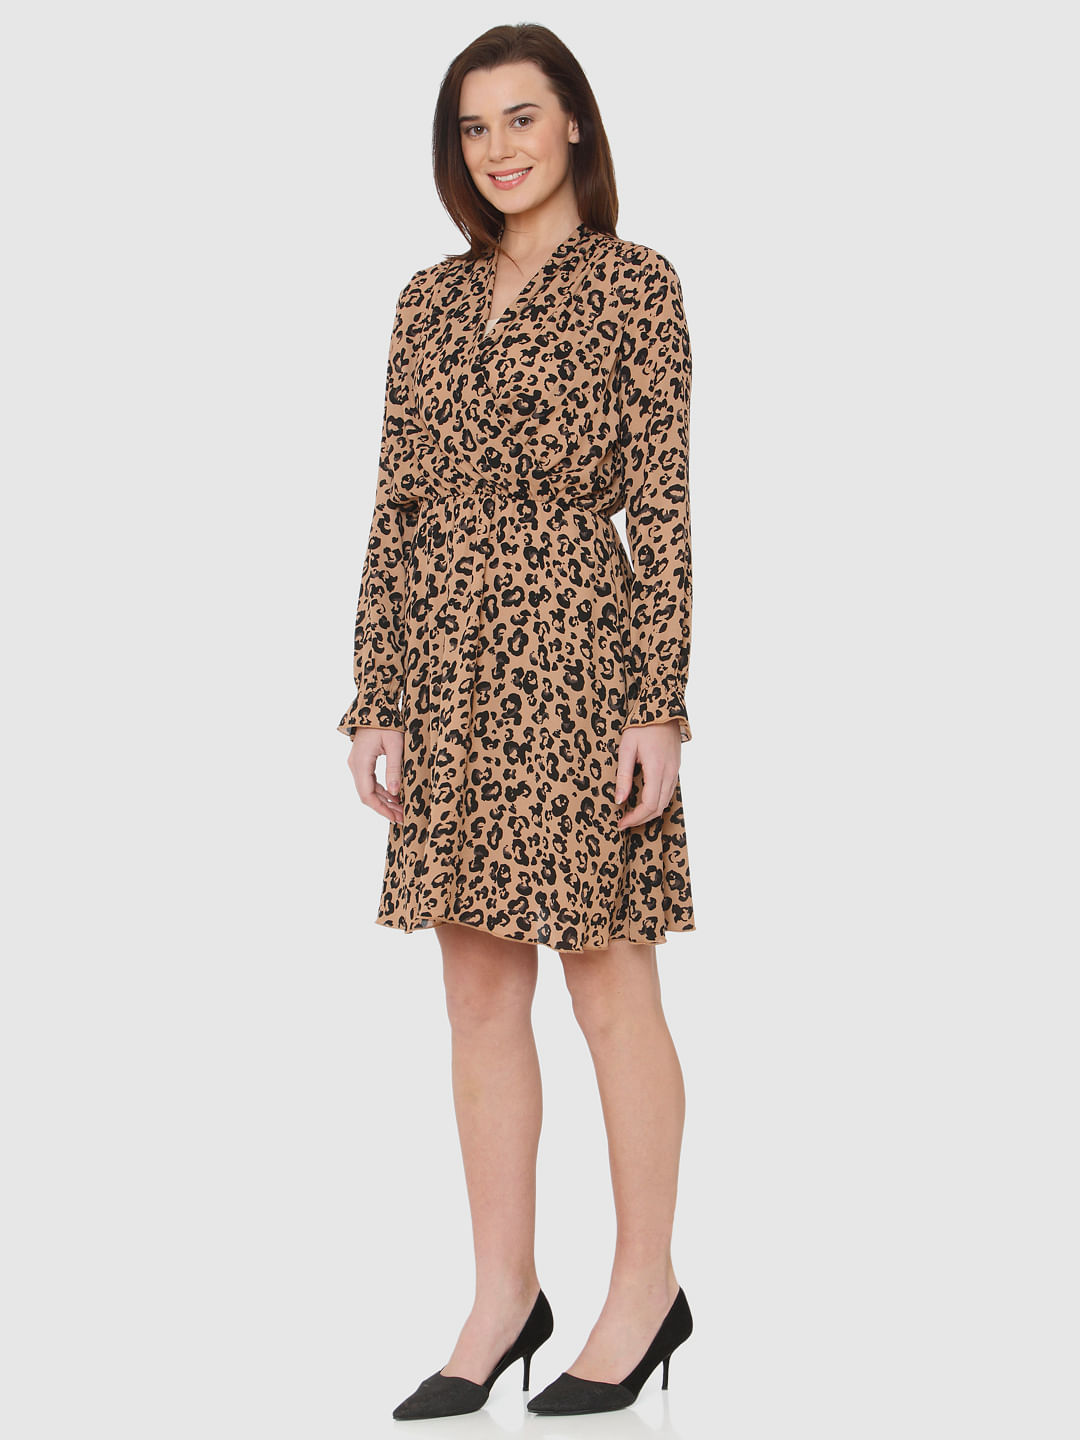 vero moda leopard print dress